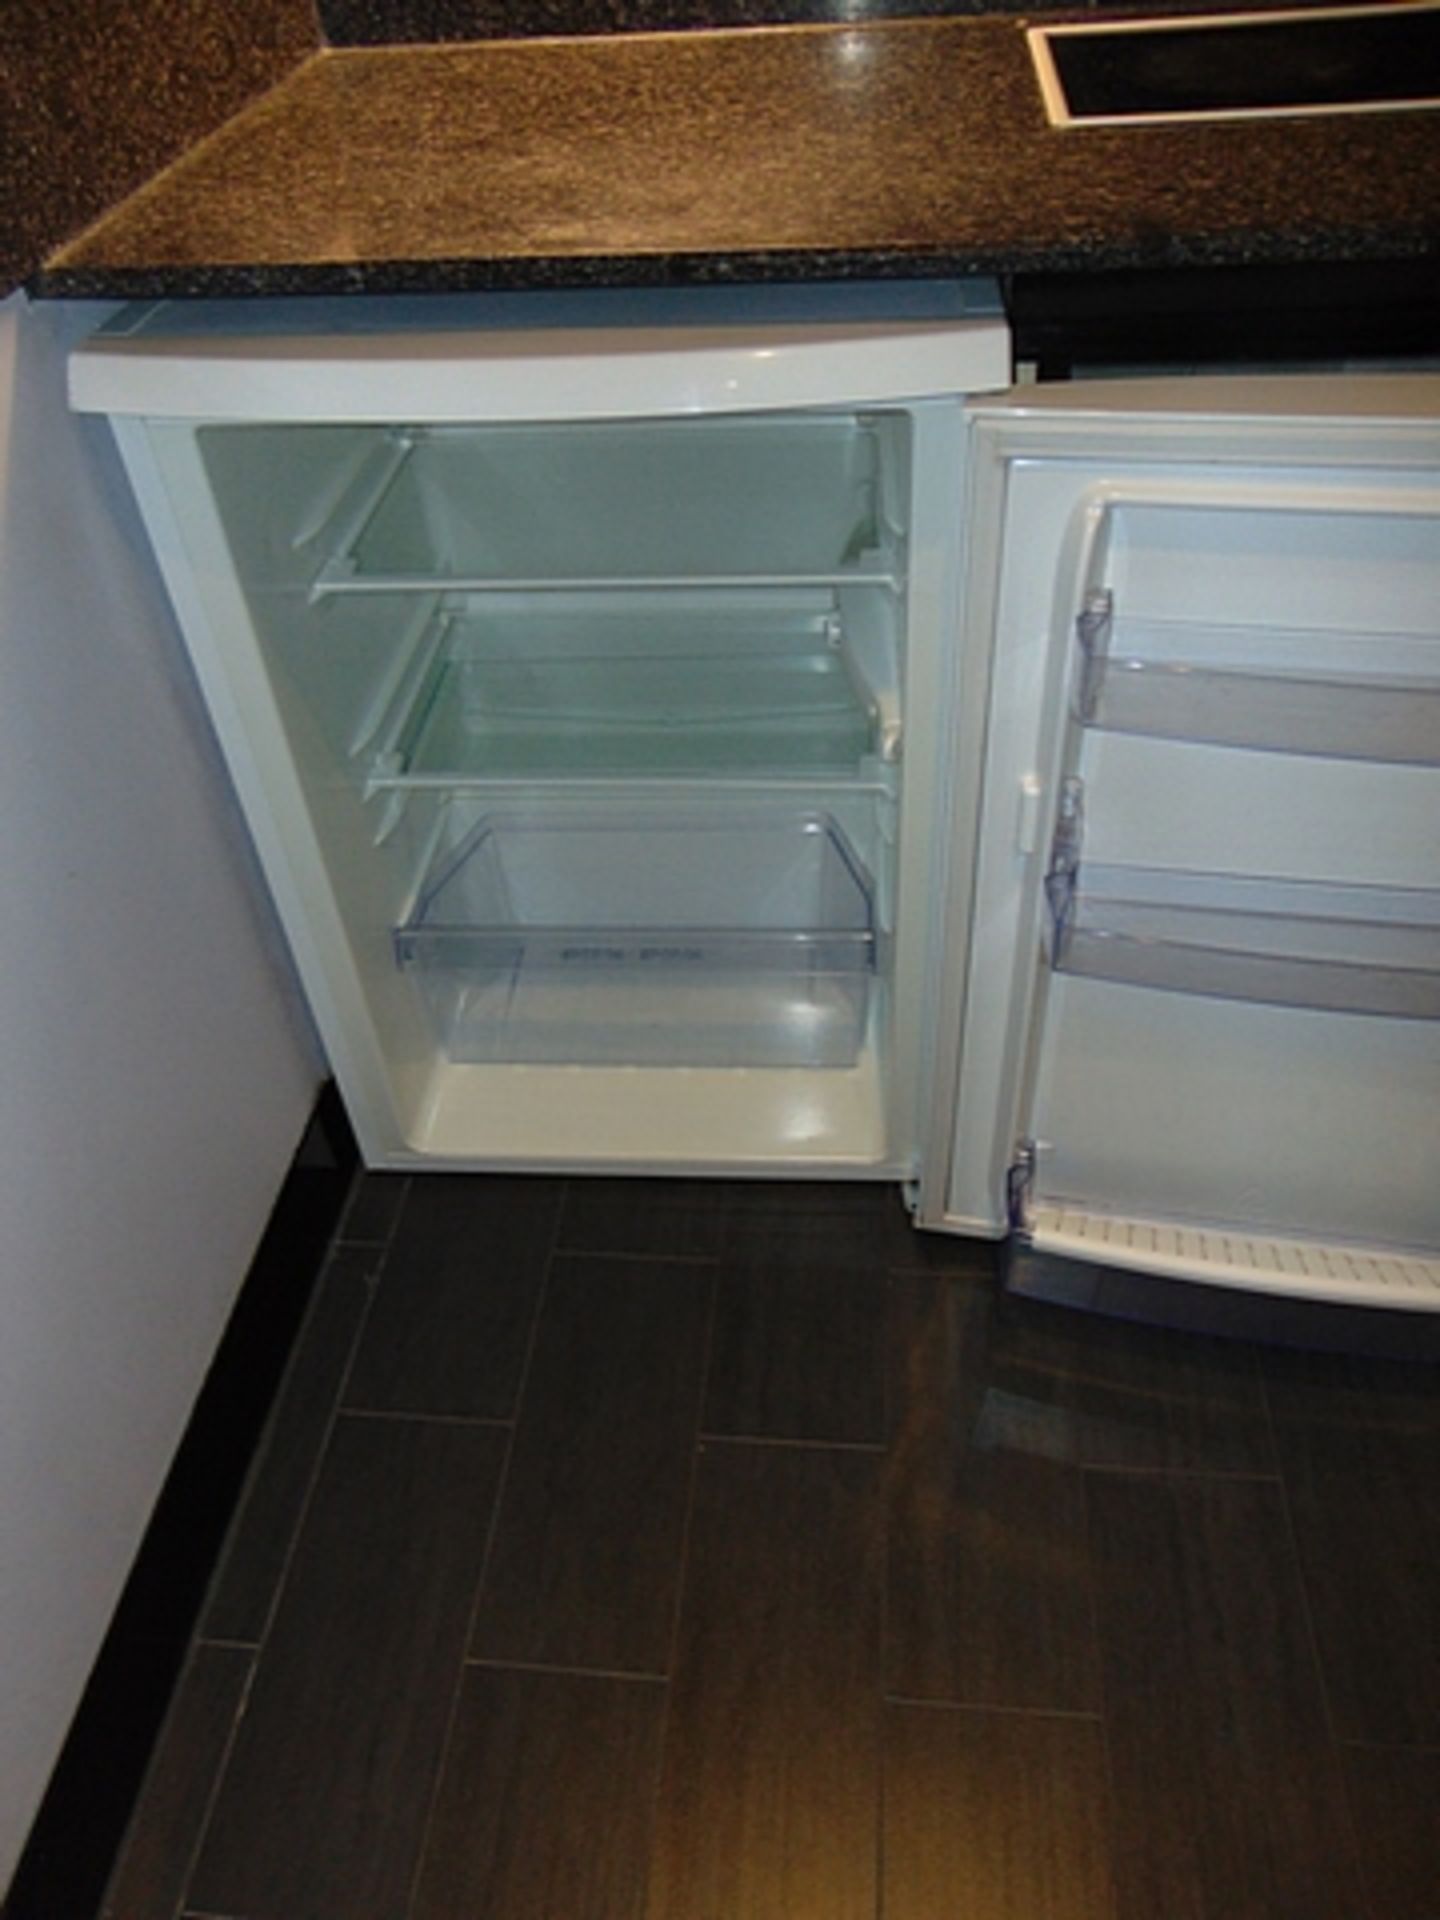 Zanussi undercounter refrigerator